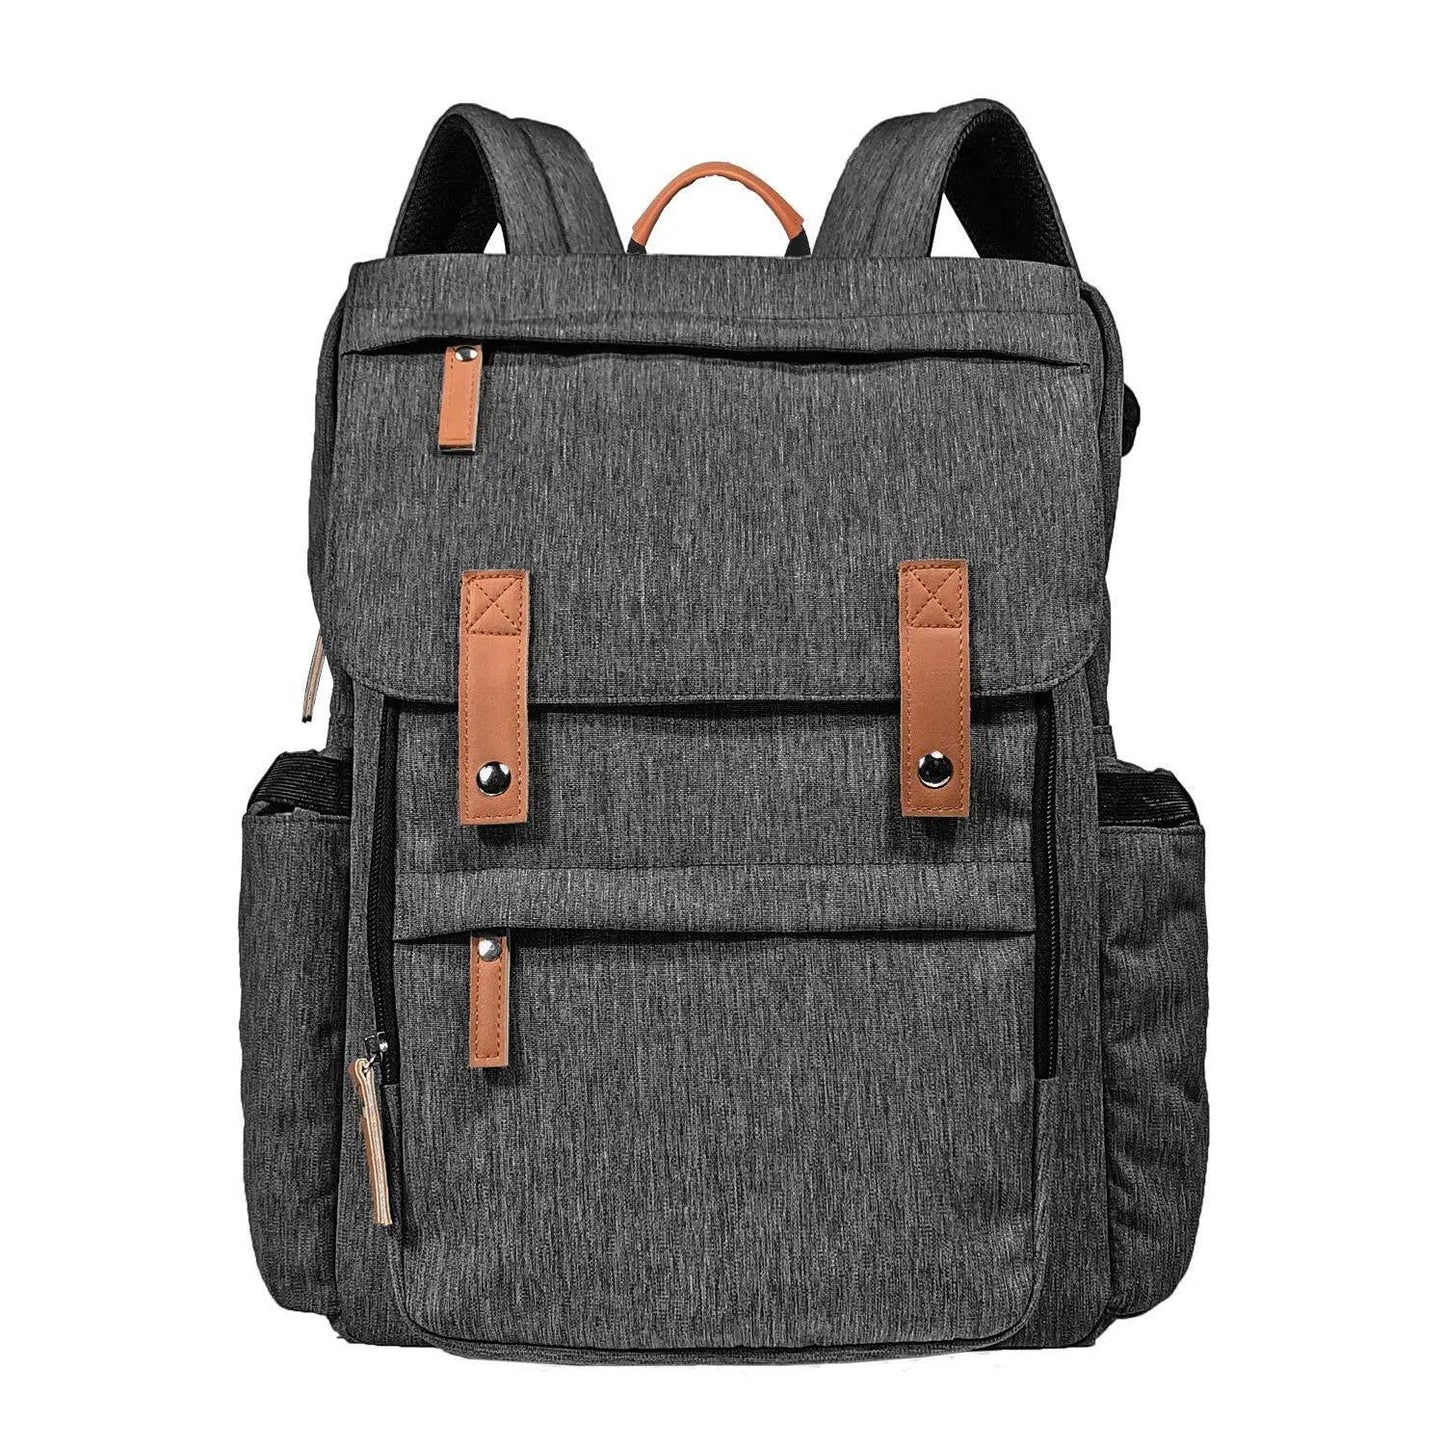 Koalacub Diaper Bag Backpack Black